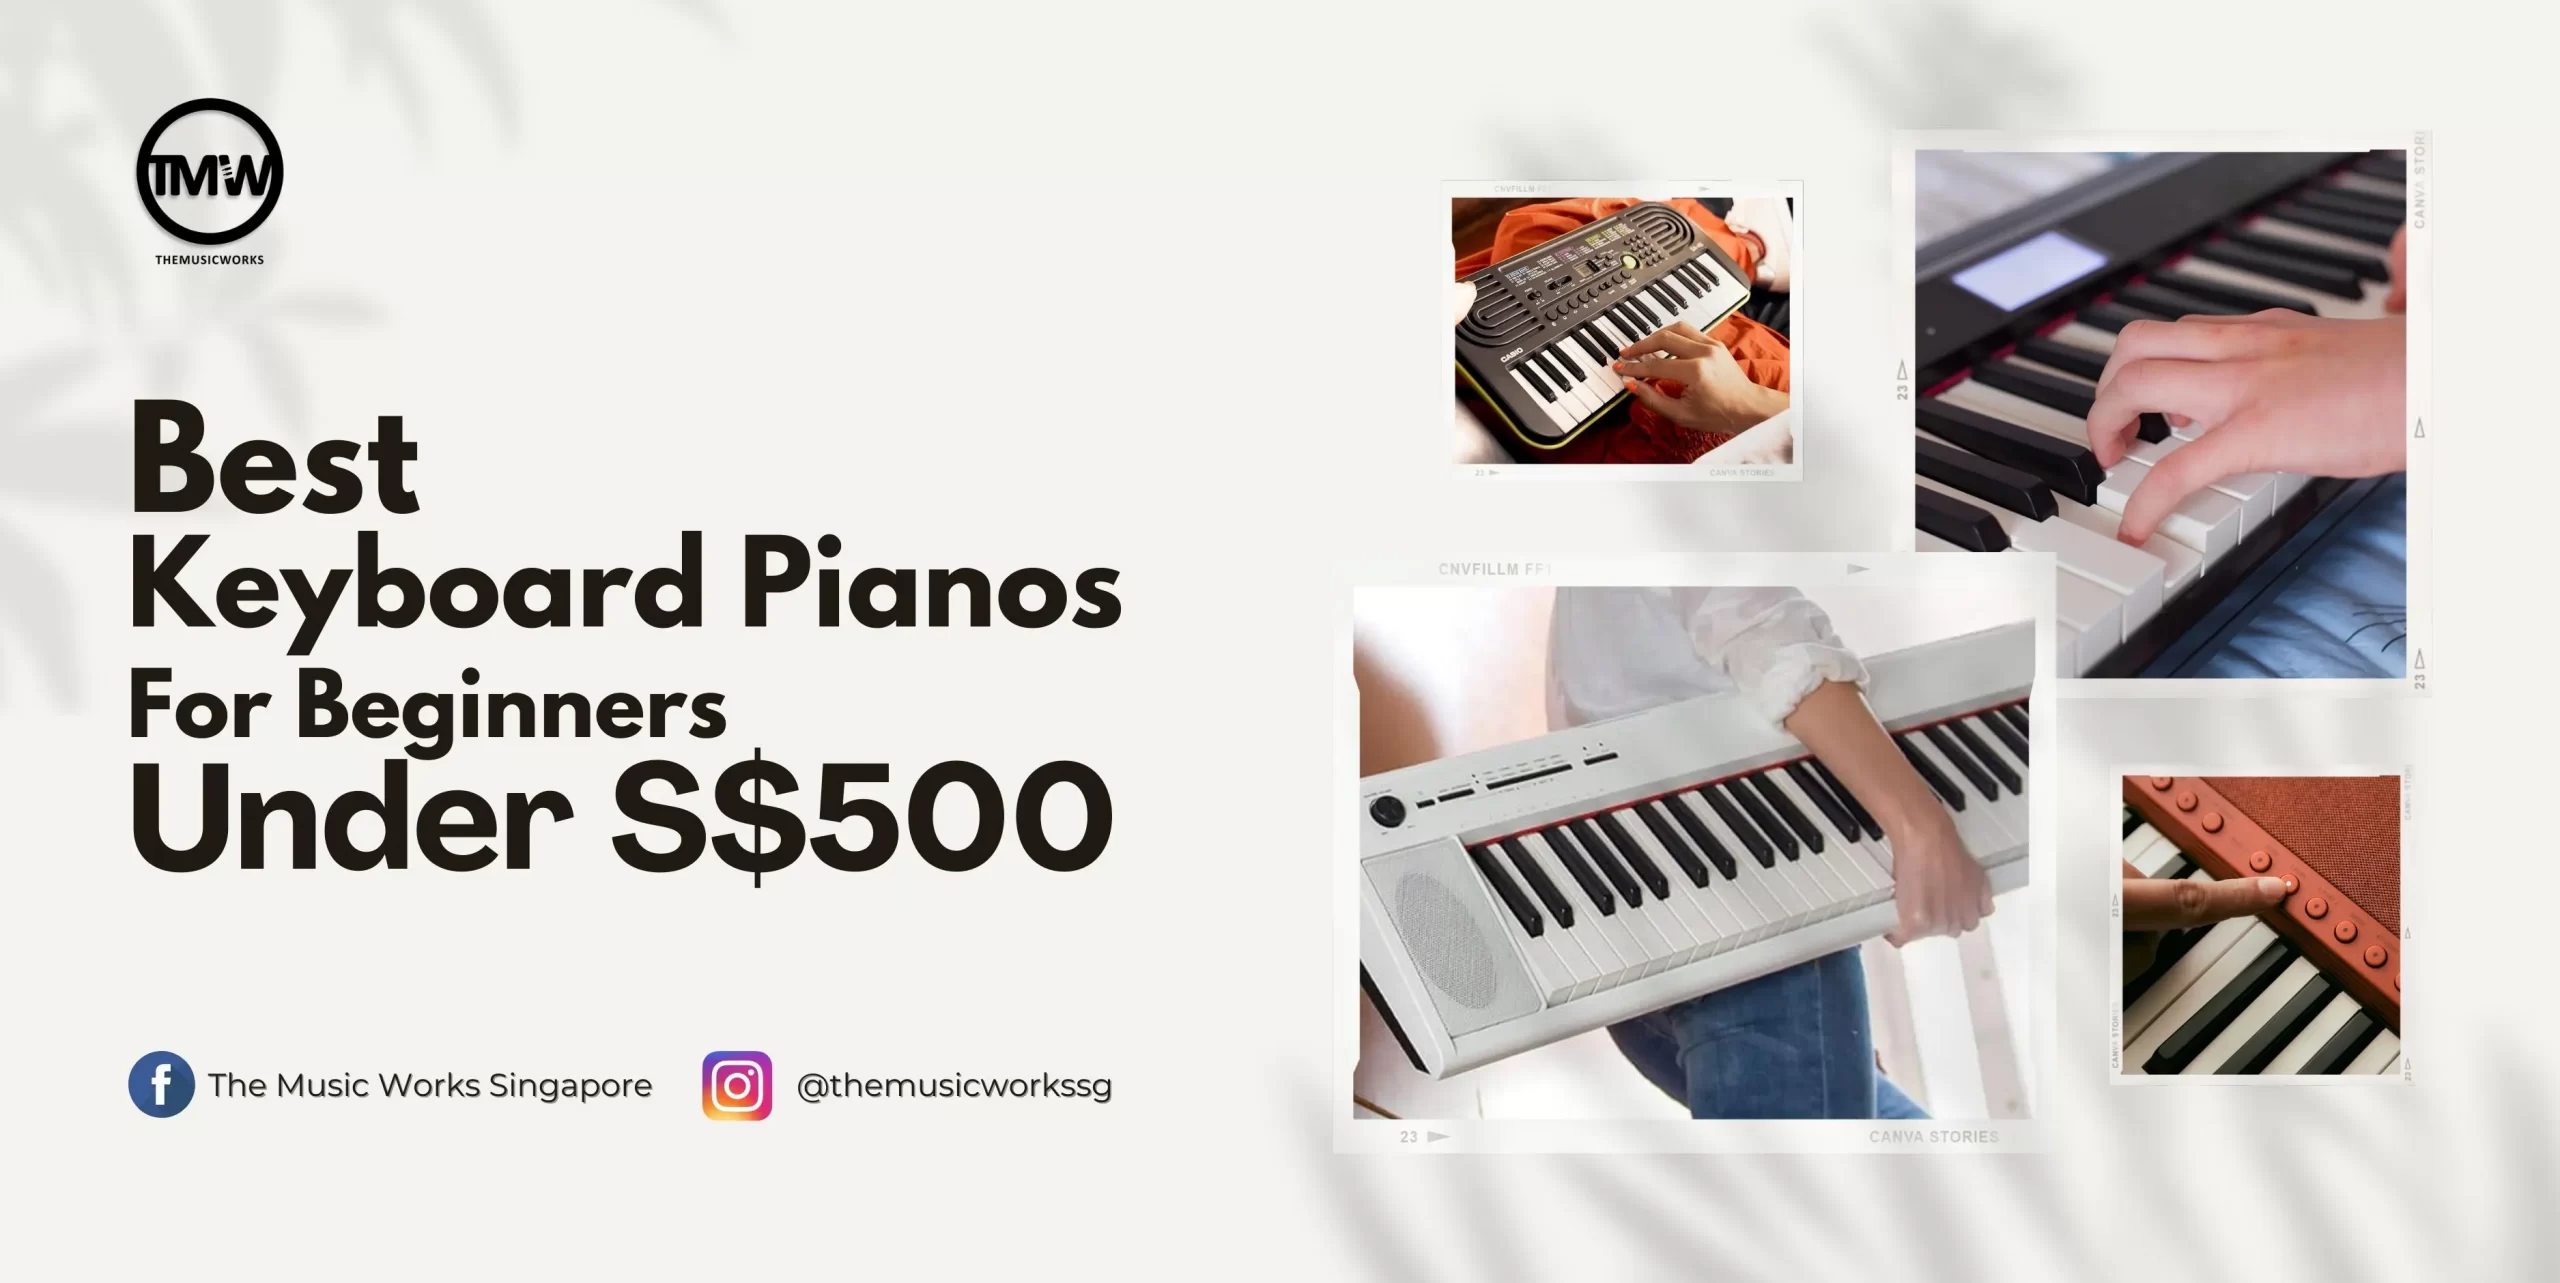 Best Keyboard Pianos for Beginners under $500